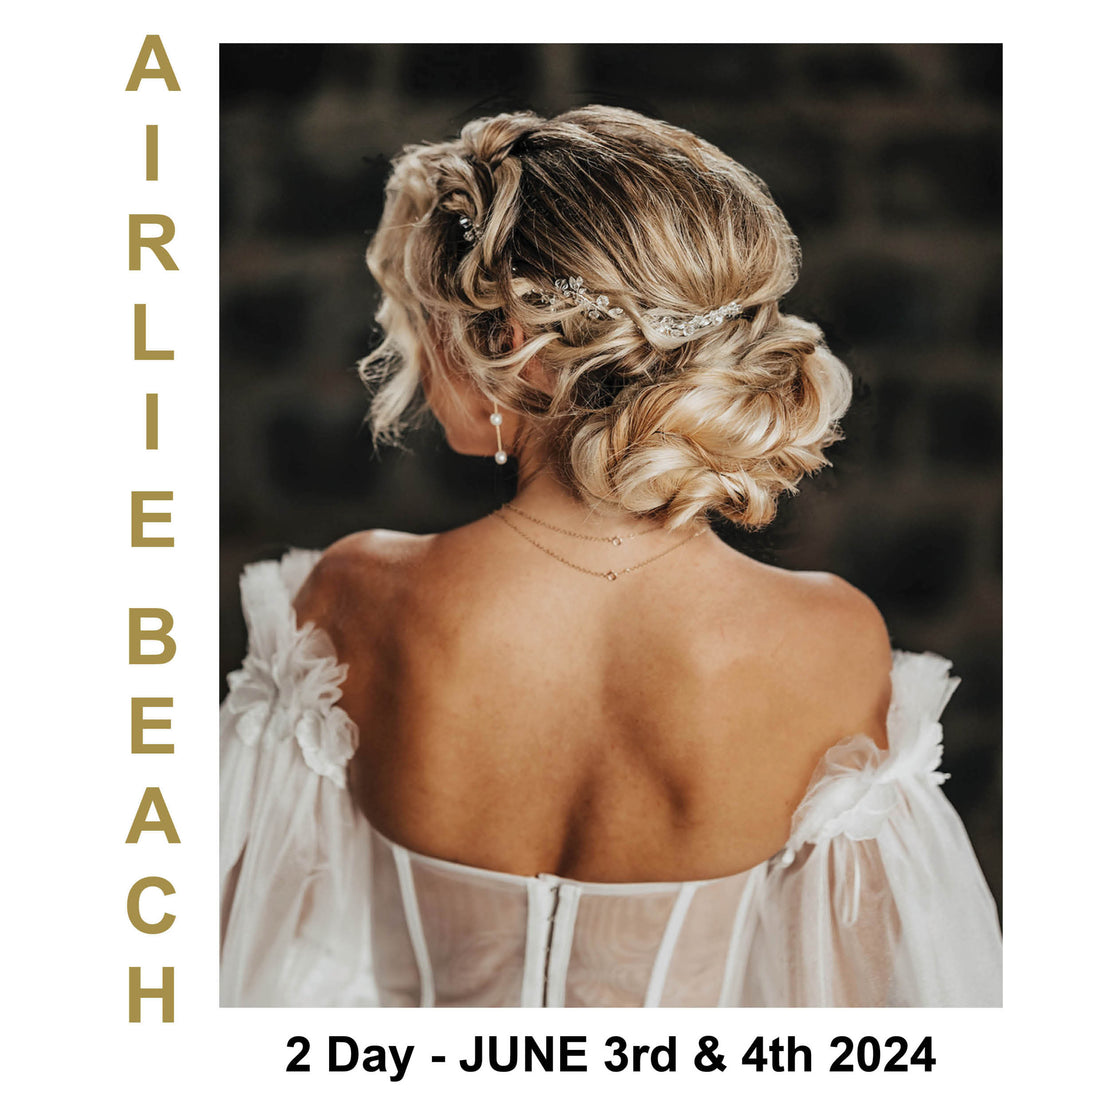 Airlie Beach - 2 Day Long Hair &amp; Bridal Workshop June 3rd &amp; 4th 2024